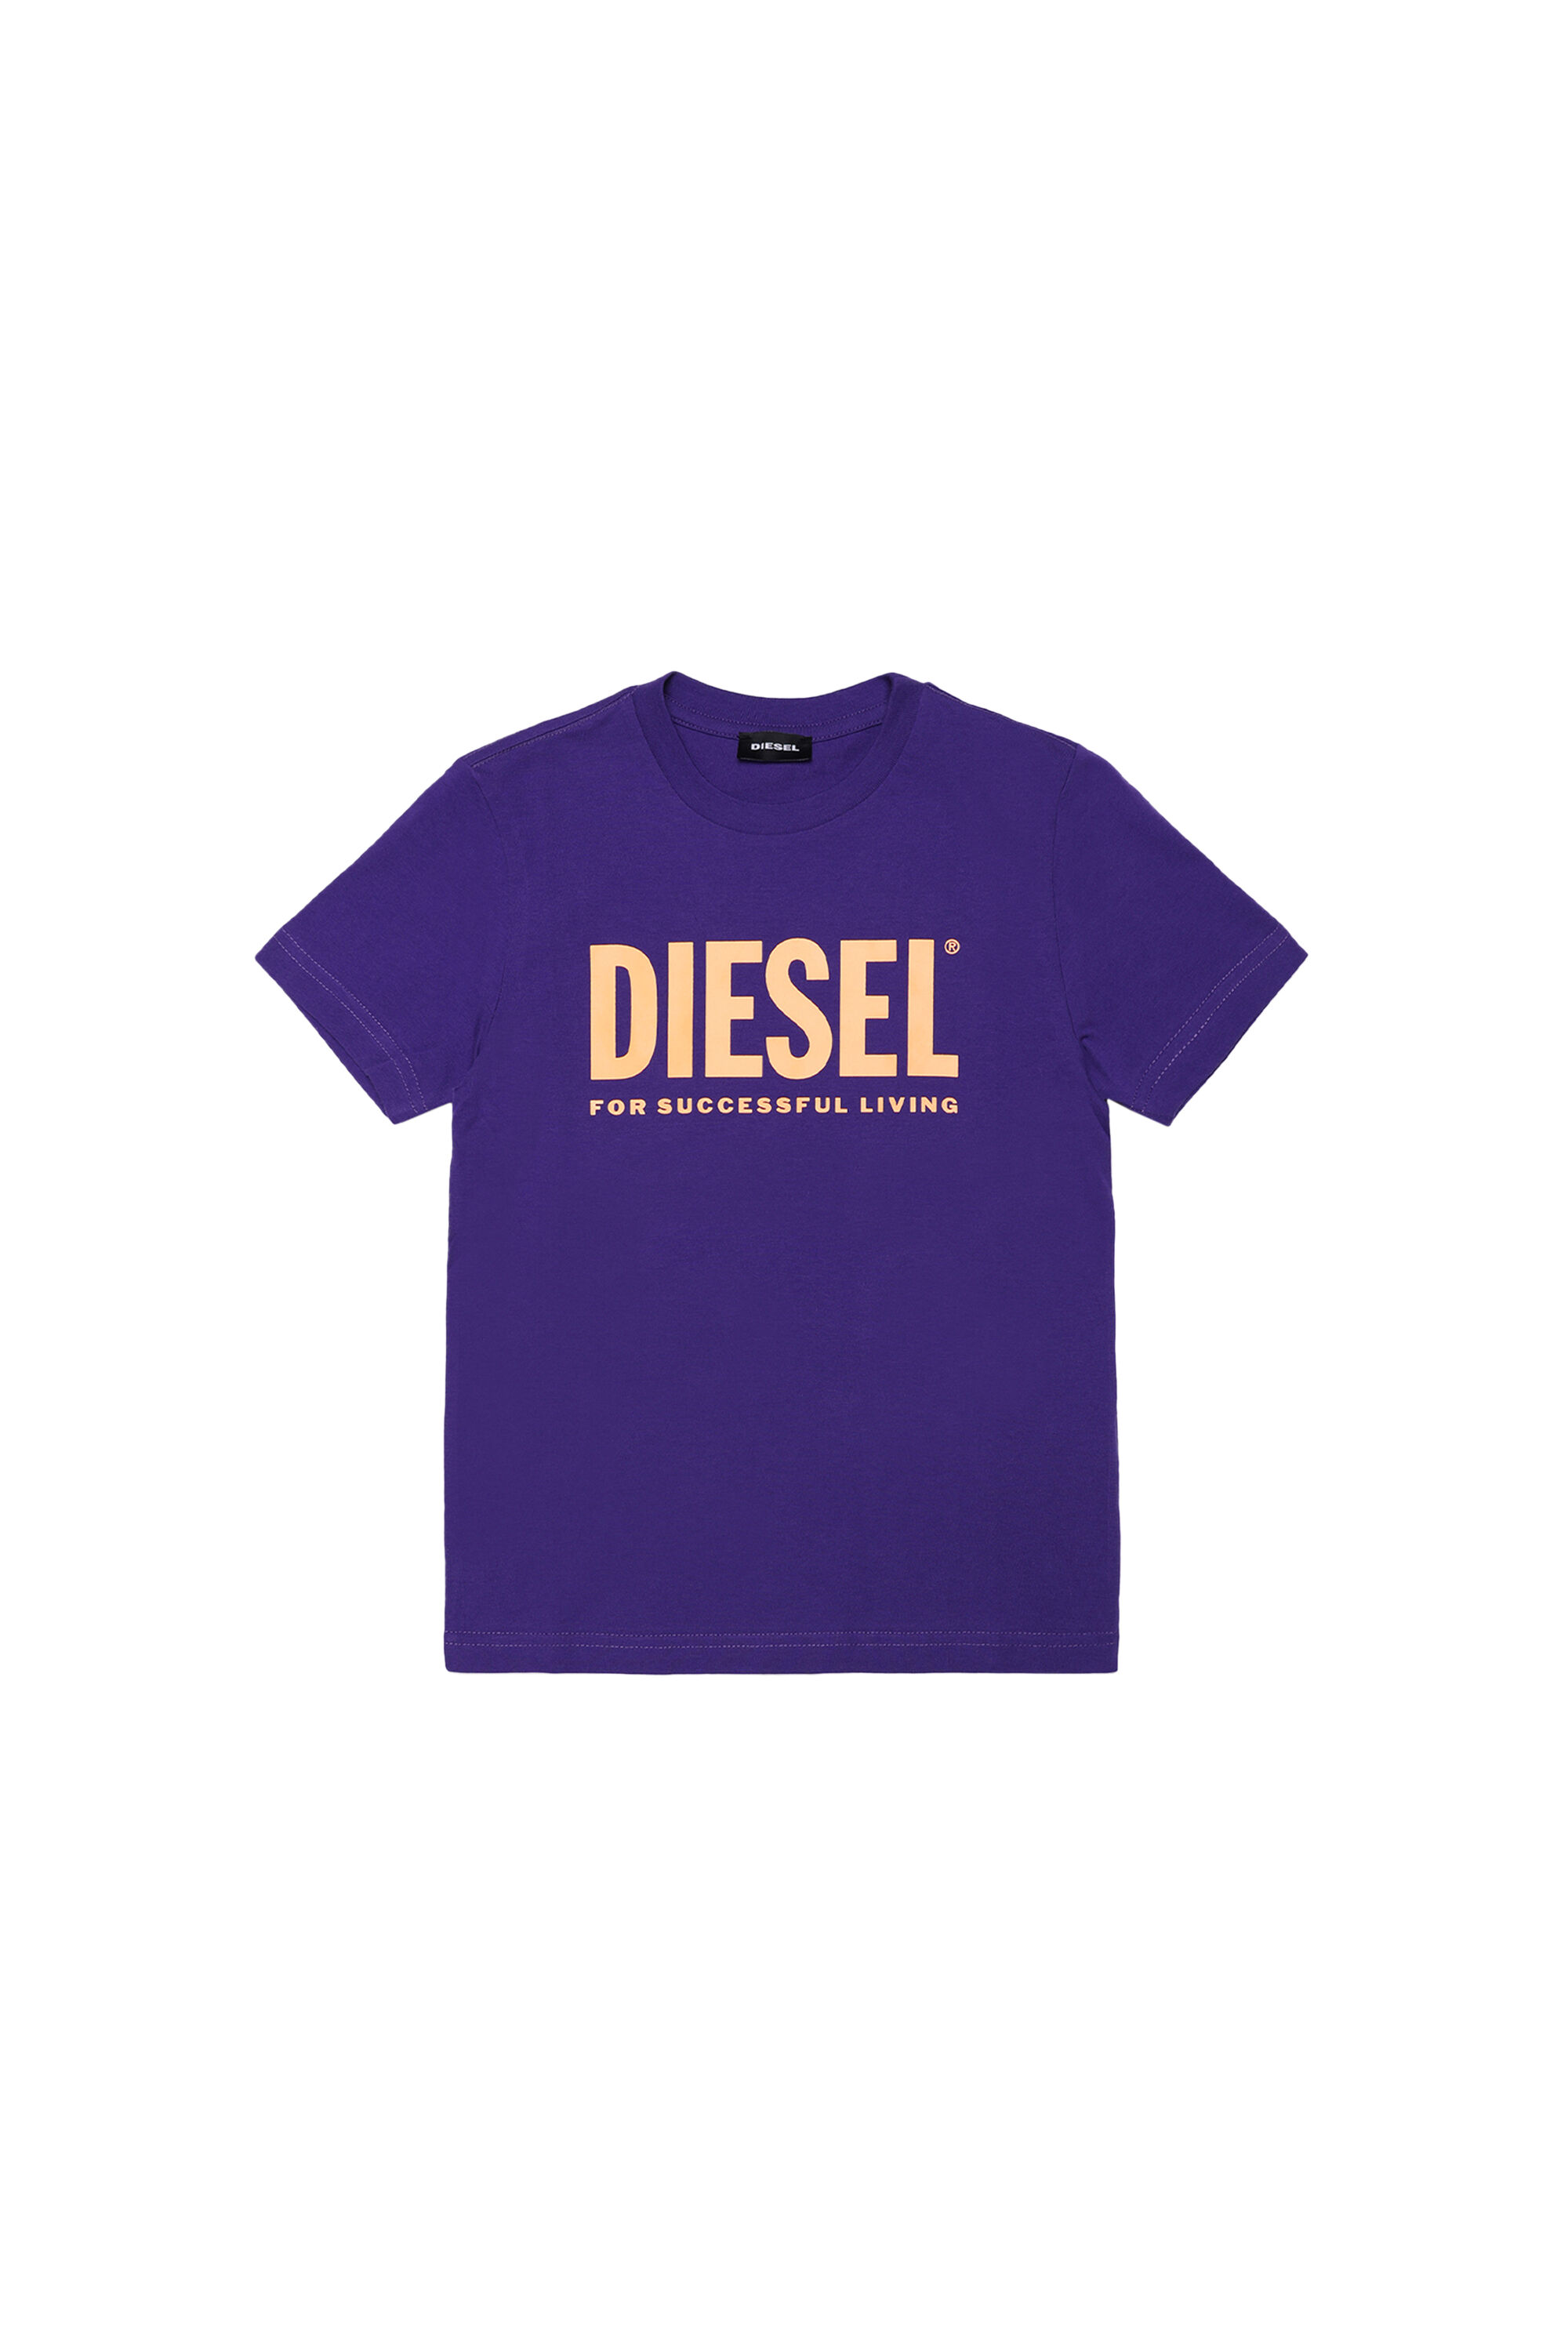 Diesel - TJUSTLOGO, Violet - Image 1